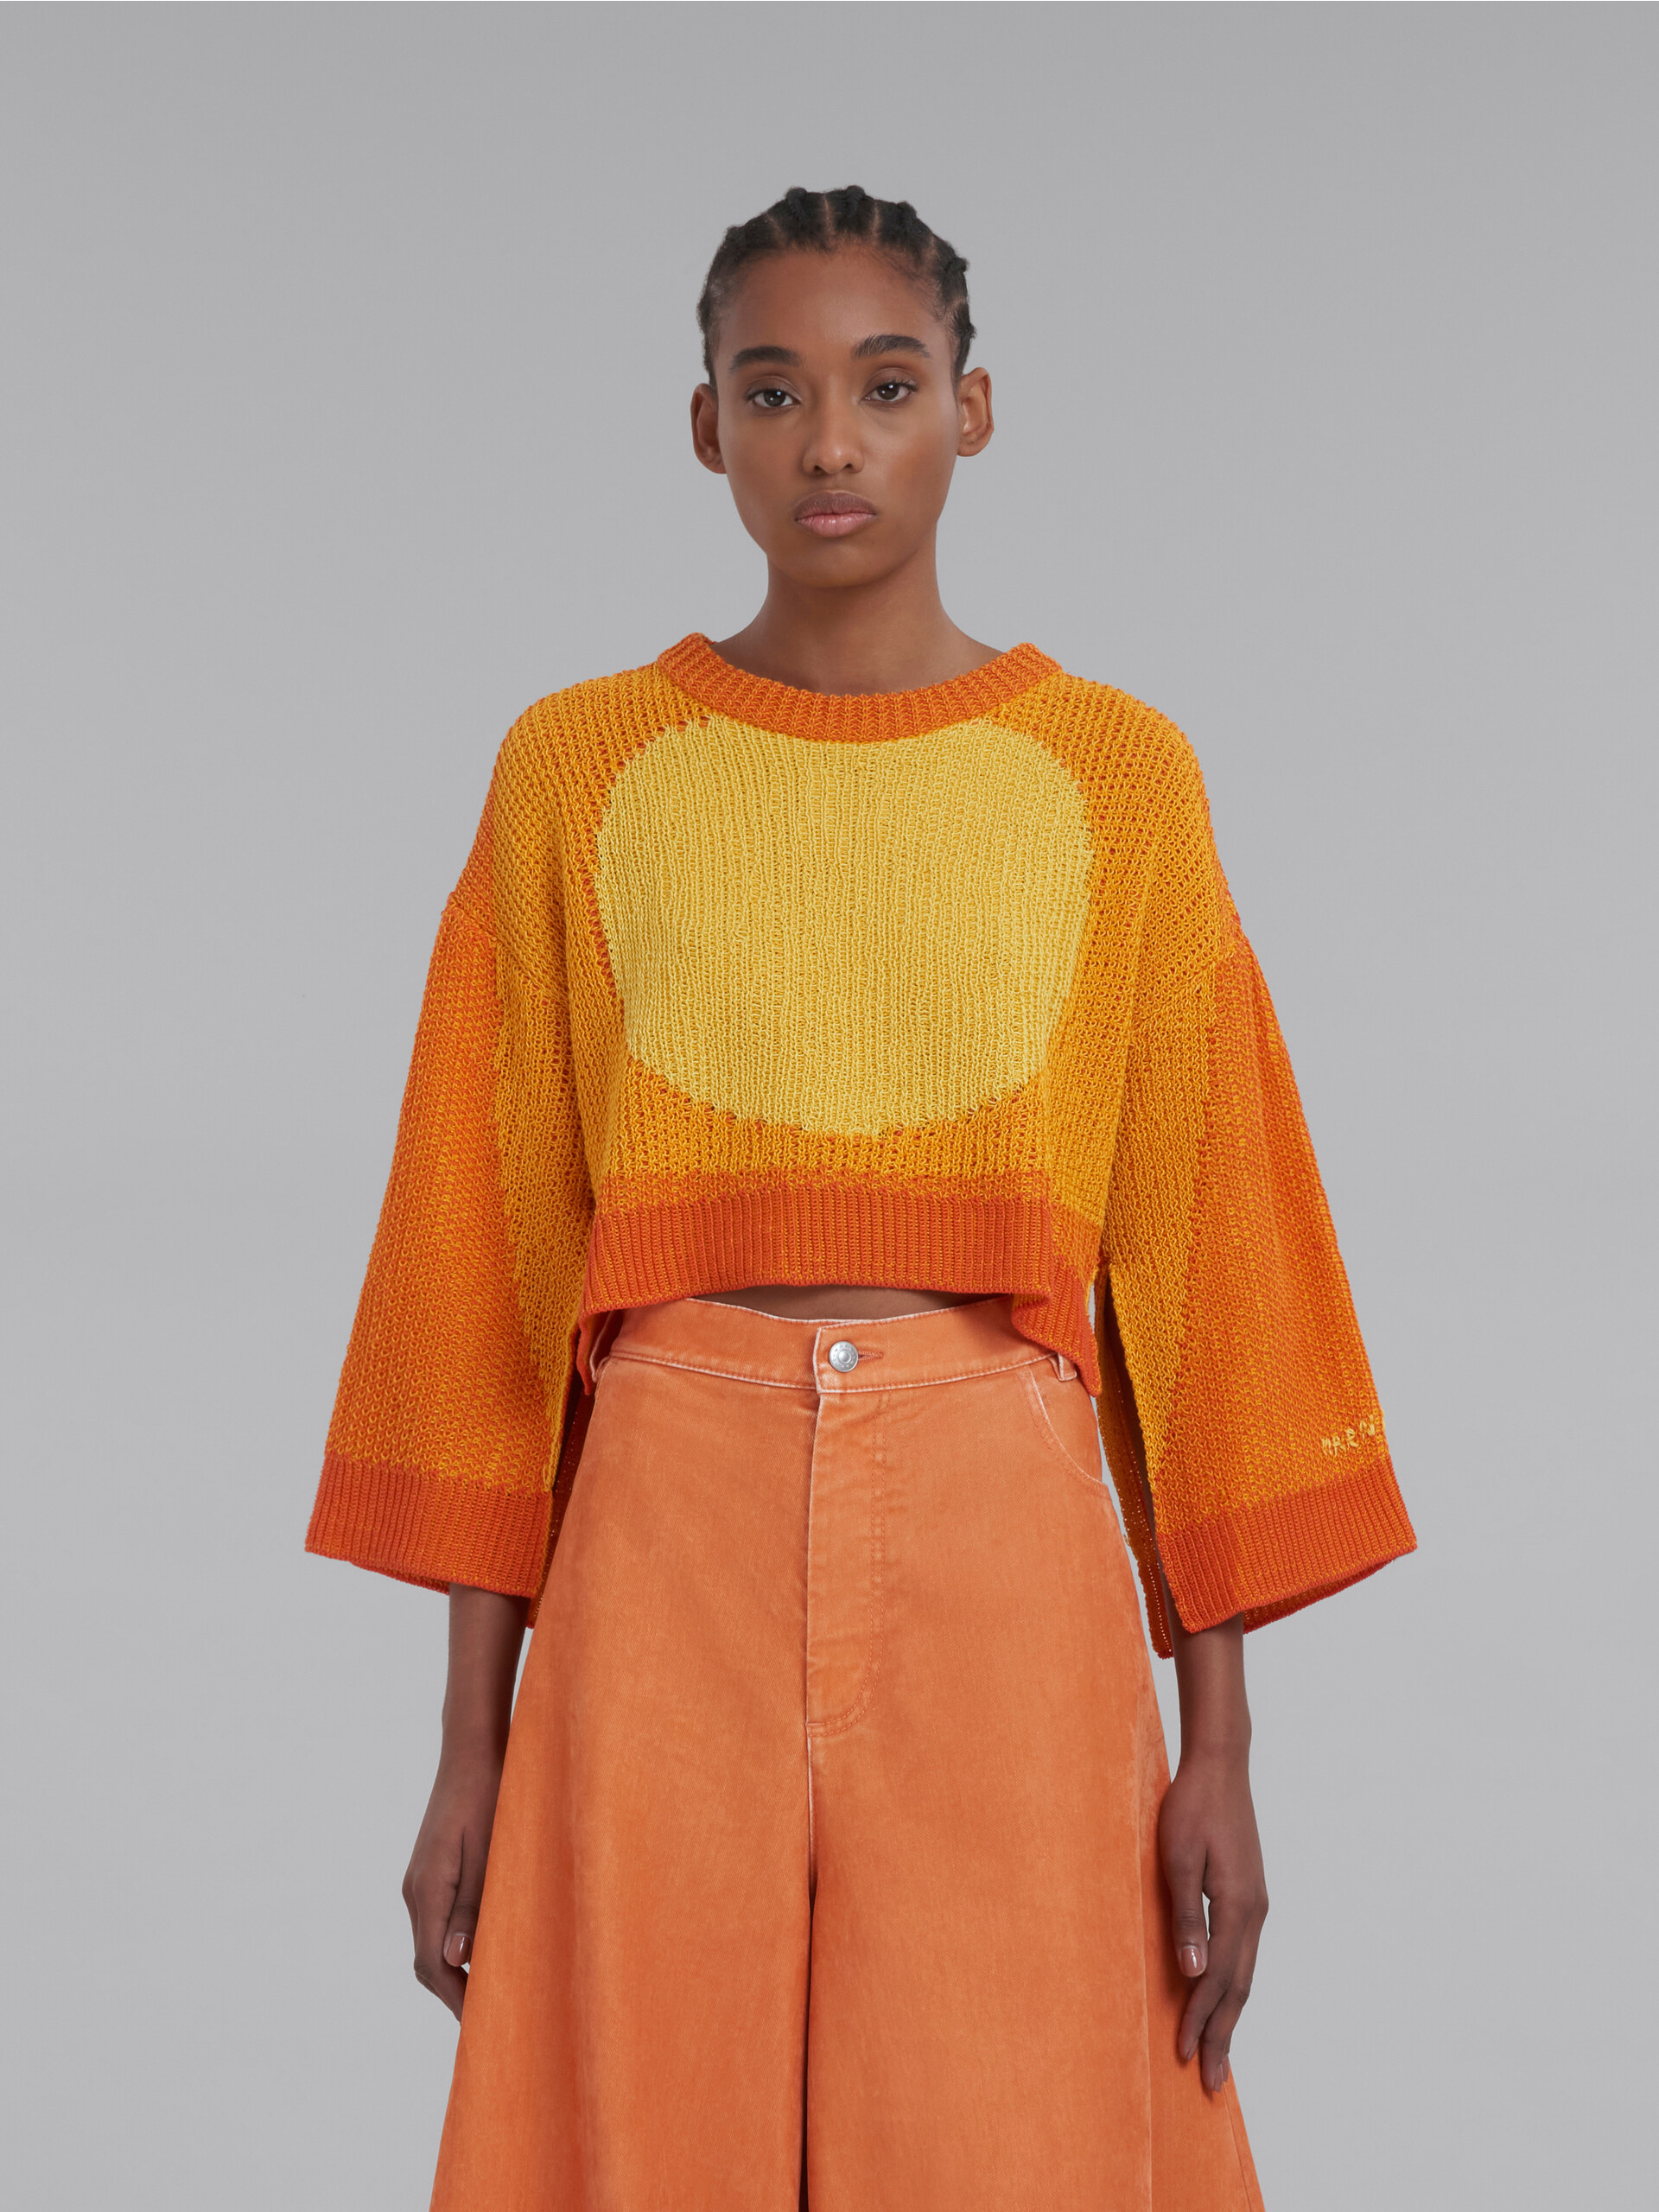 Orange jumper with kimono sleeves - Pullovers - Image 2